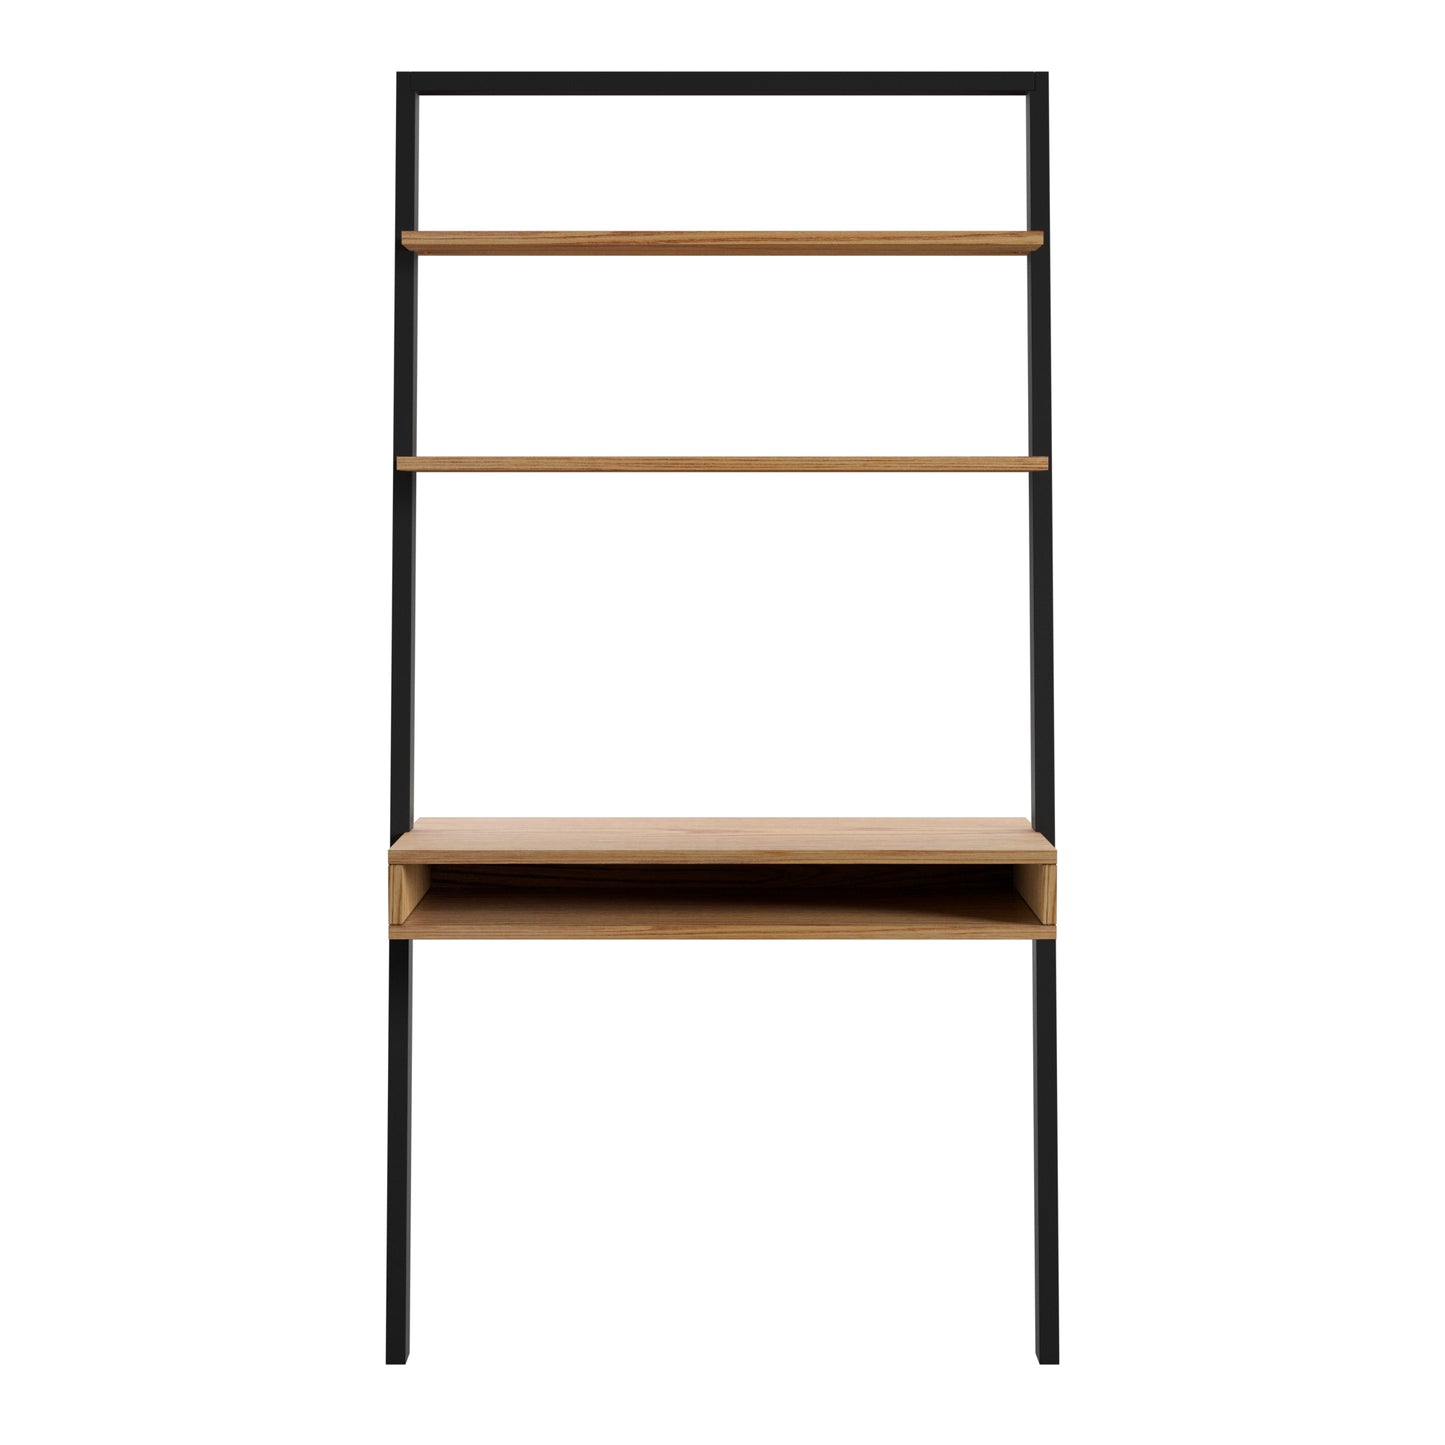 Two-Tone Leaning Ladder Desk - Black and Oak Finish